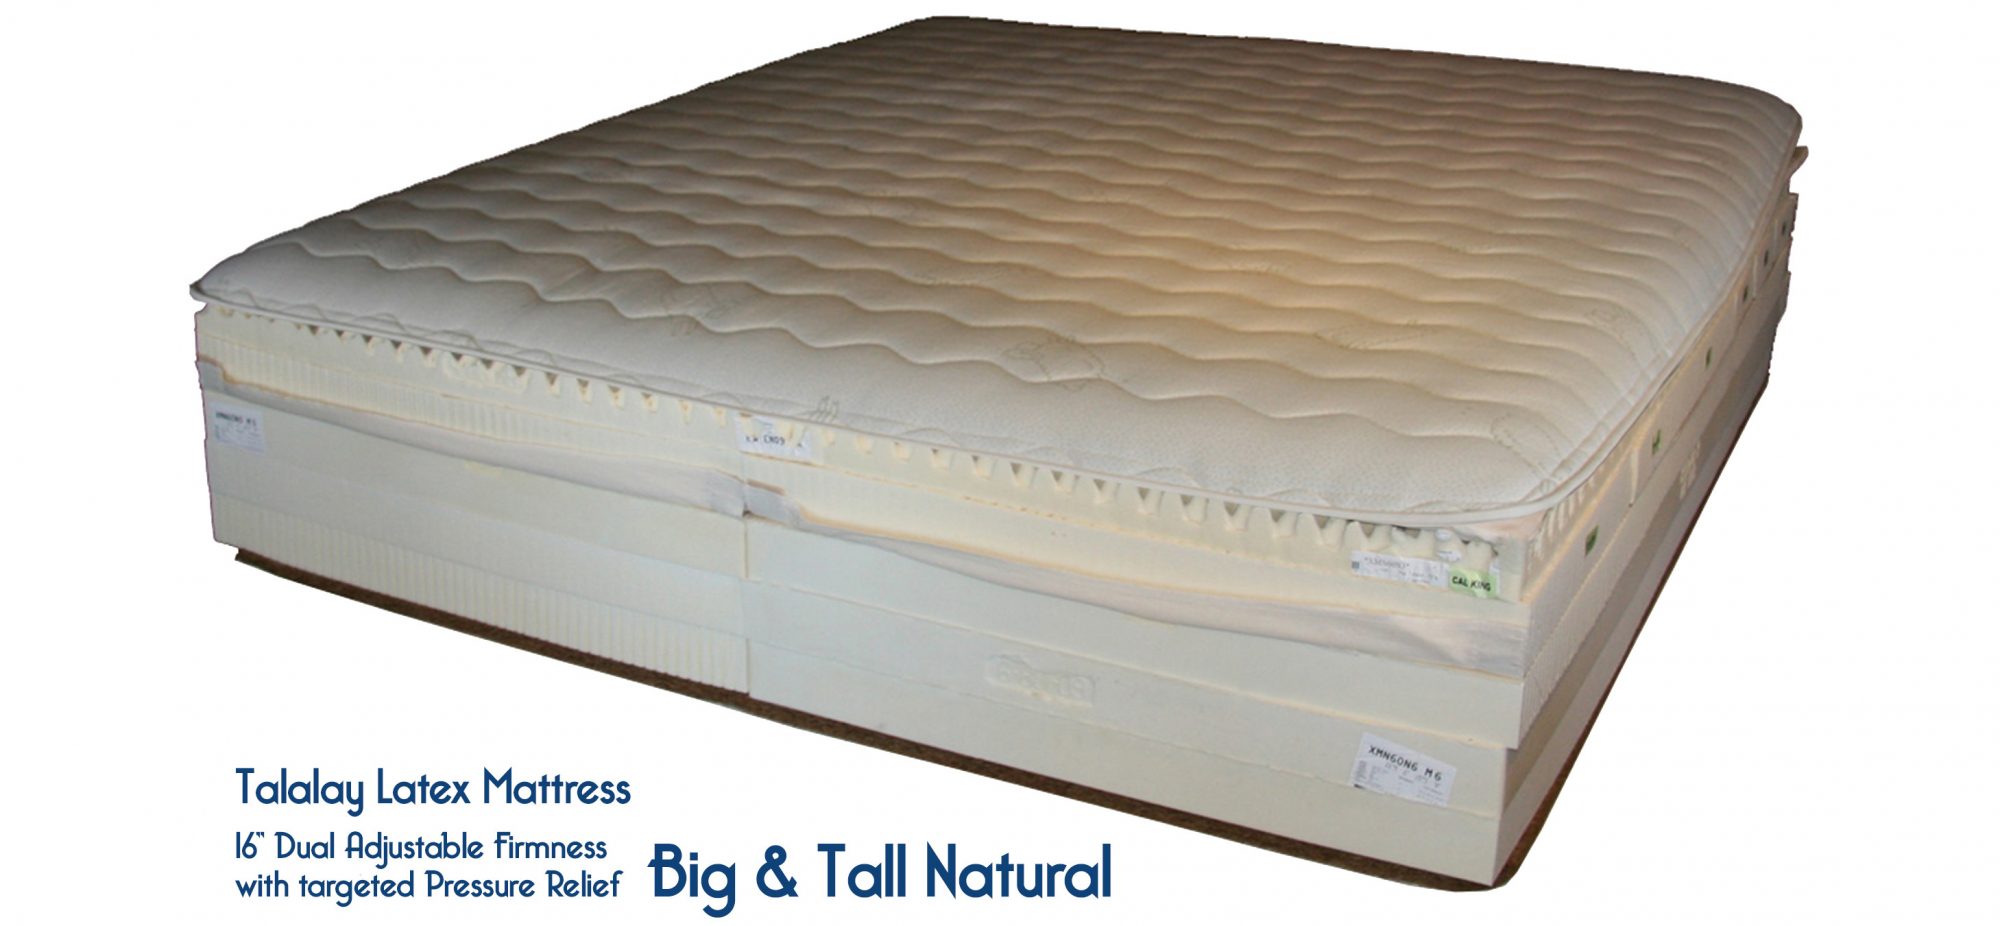 9 inch tall mattress foundation